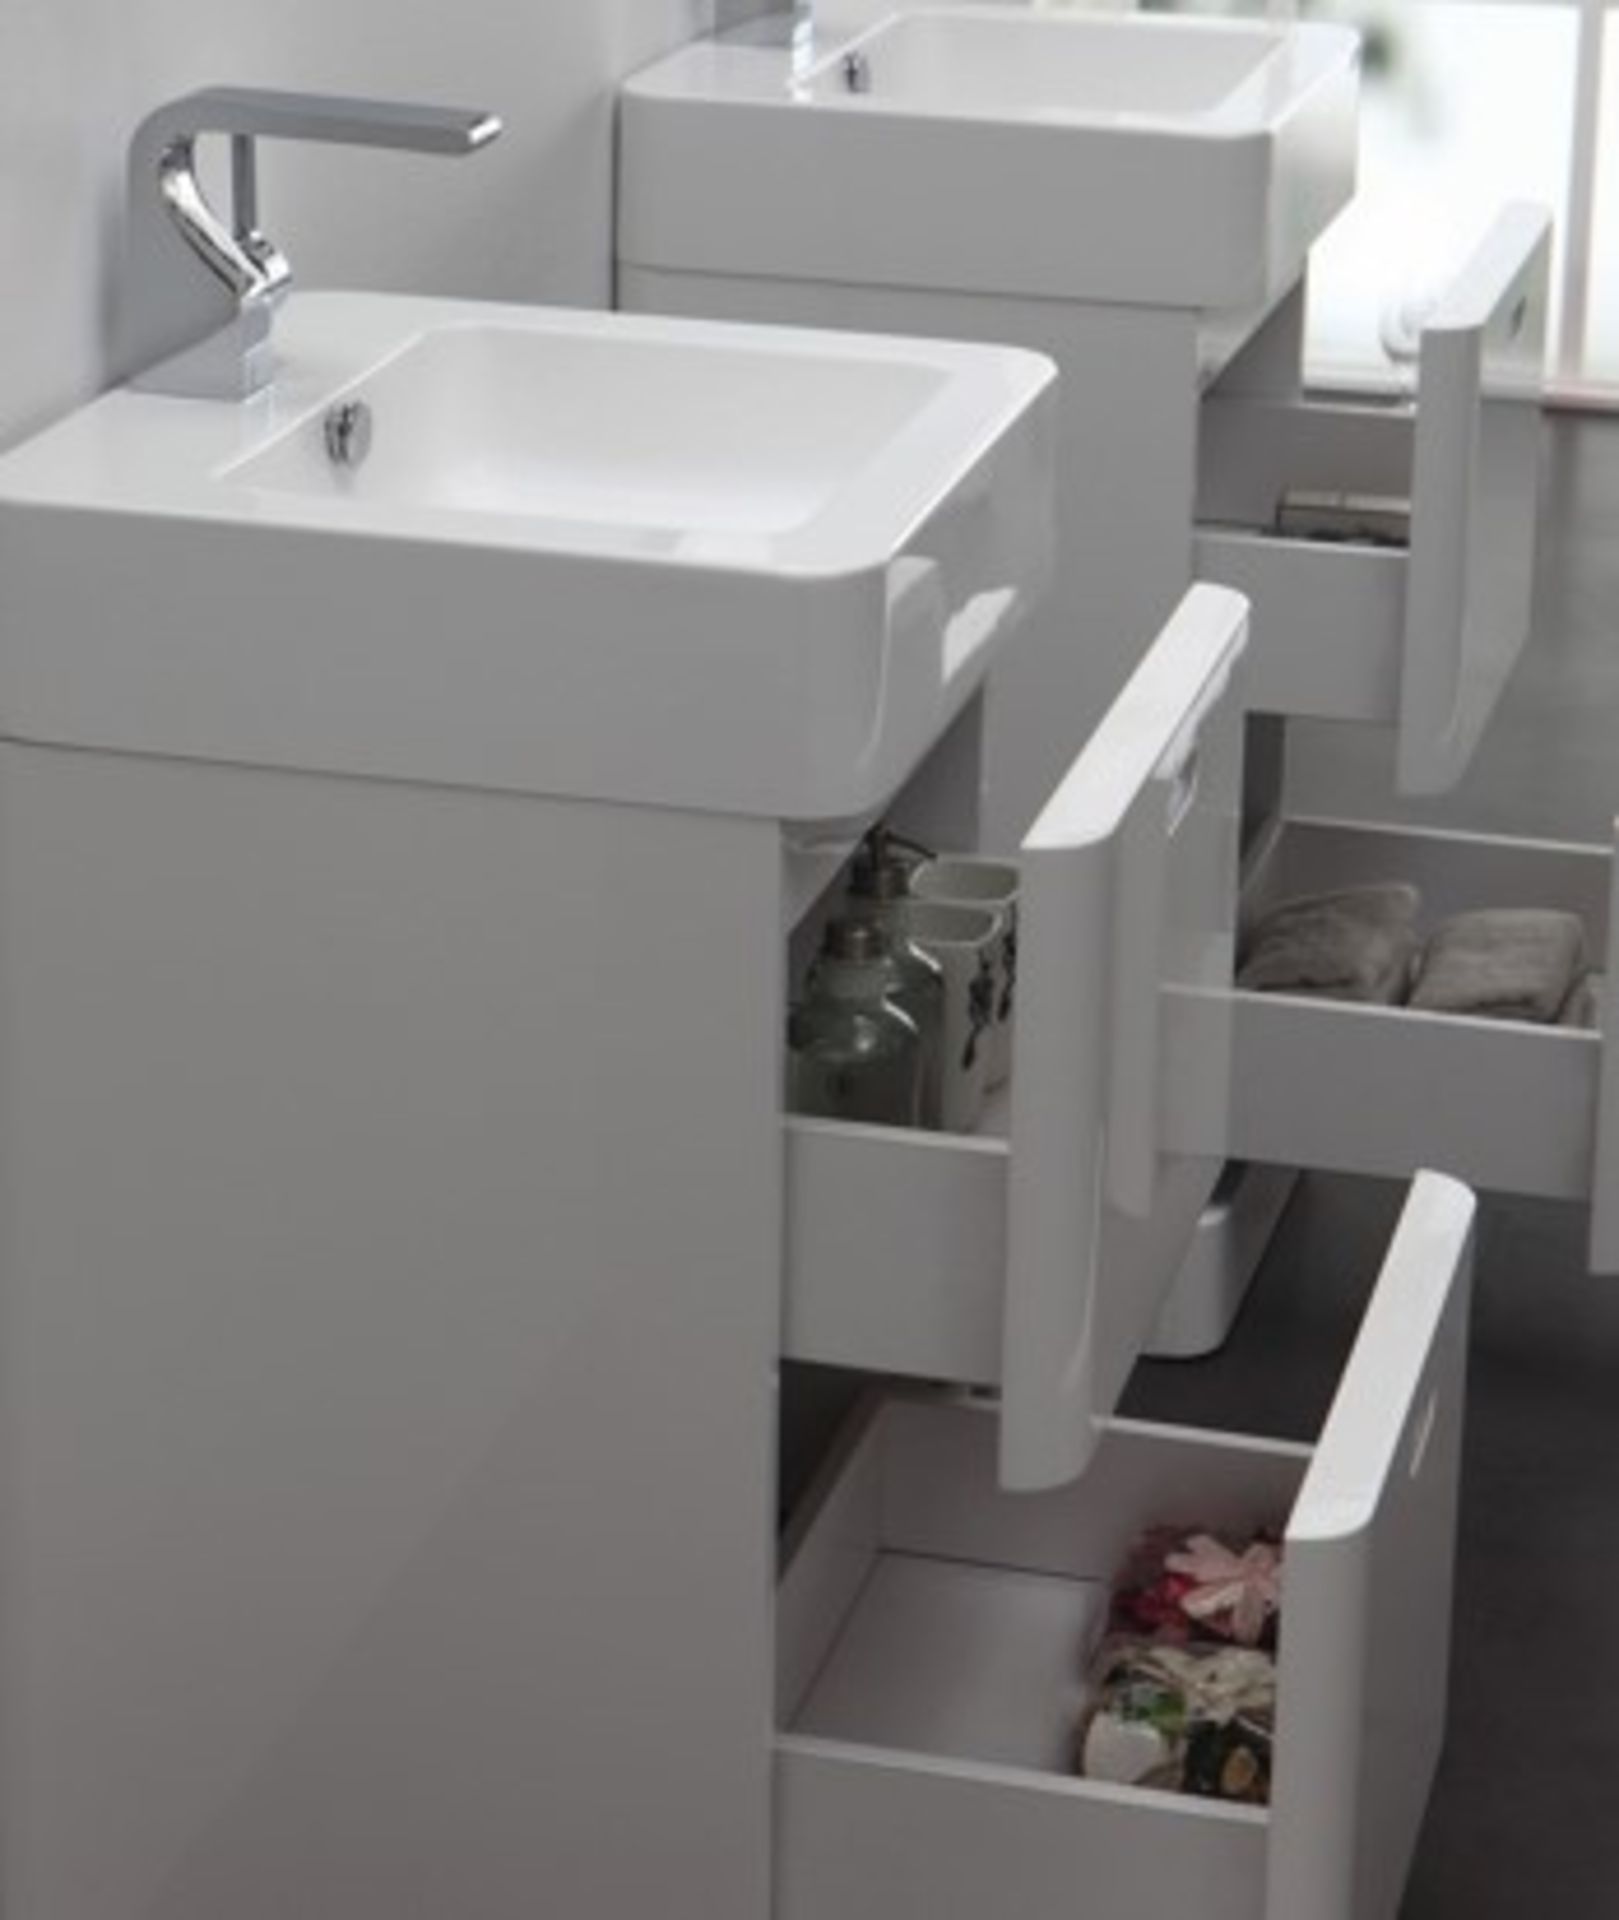 1 x Austin Bathrooms Urban Mini Stack 45 Bathroom Vanity Unit With Marbletech Sink Basin - 45cm Wide - Image 3 of 6